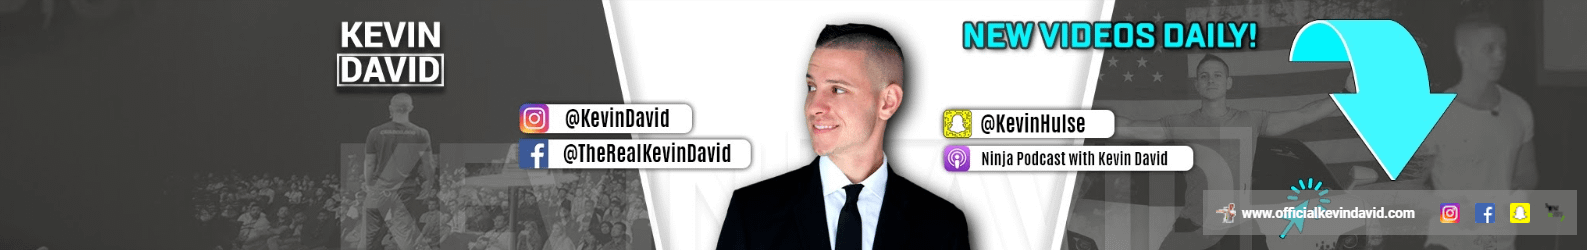 Kevin David YouTube Banner